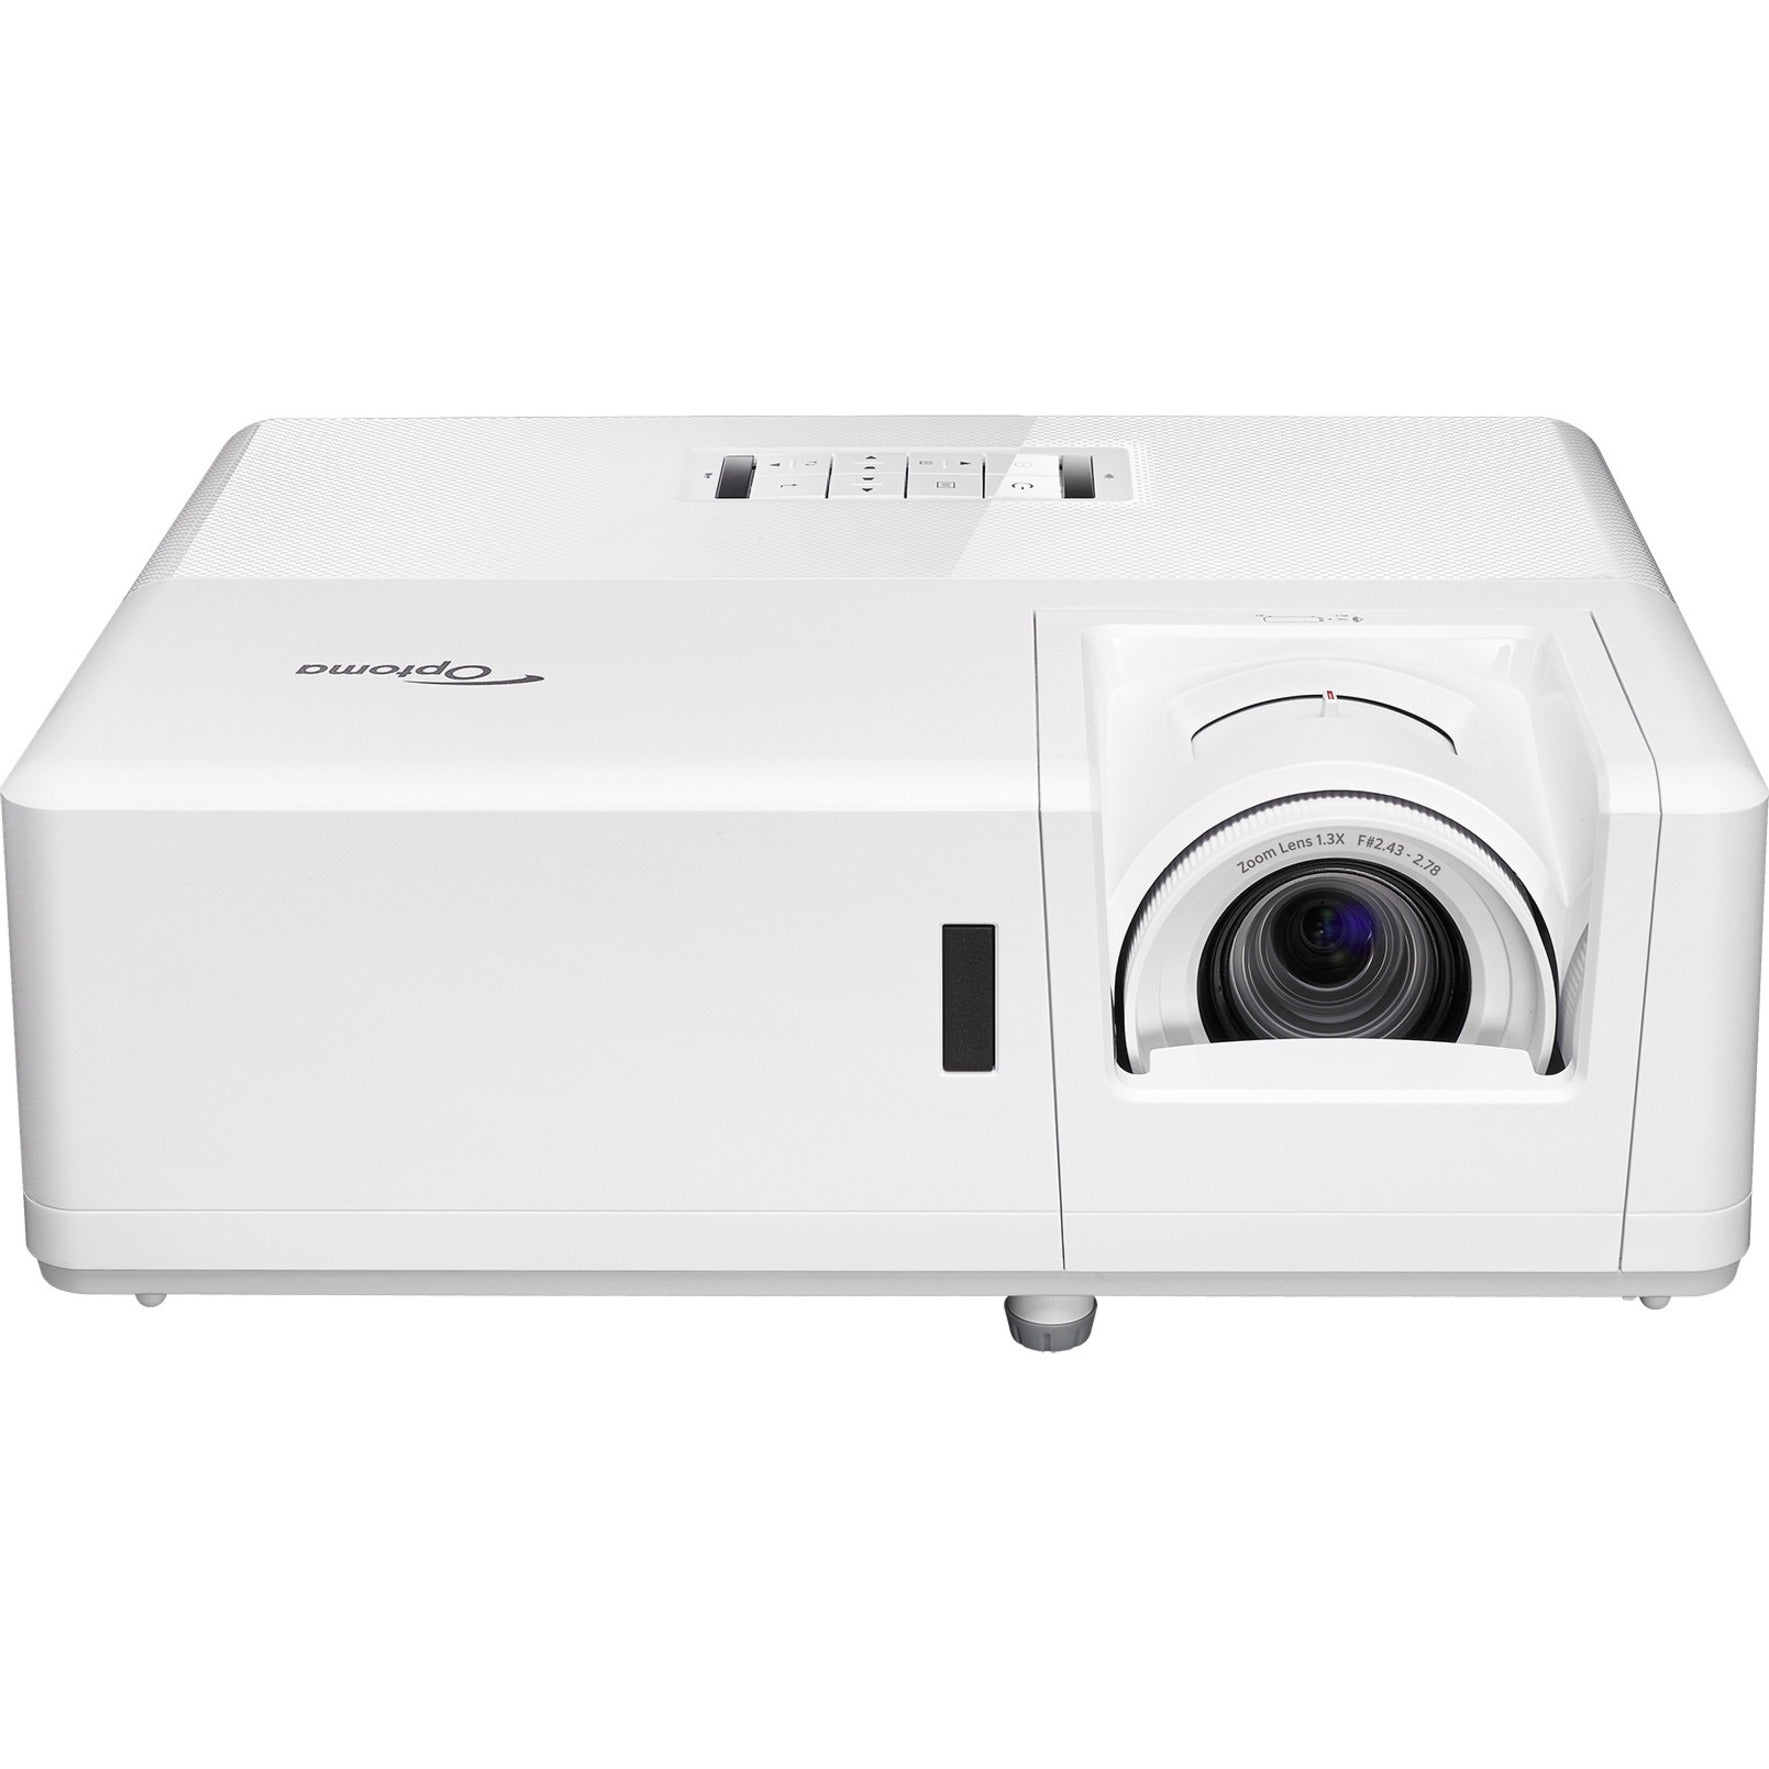 Optoma ZW400 WXGA Laser Projector - 16:10 Aspect Ratio [Discontinued]